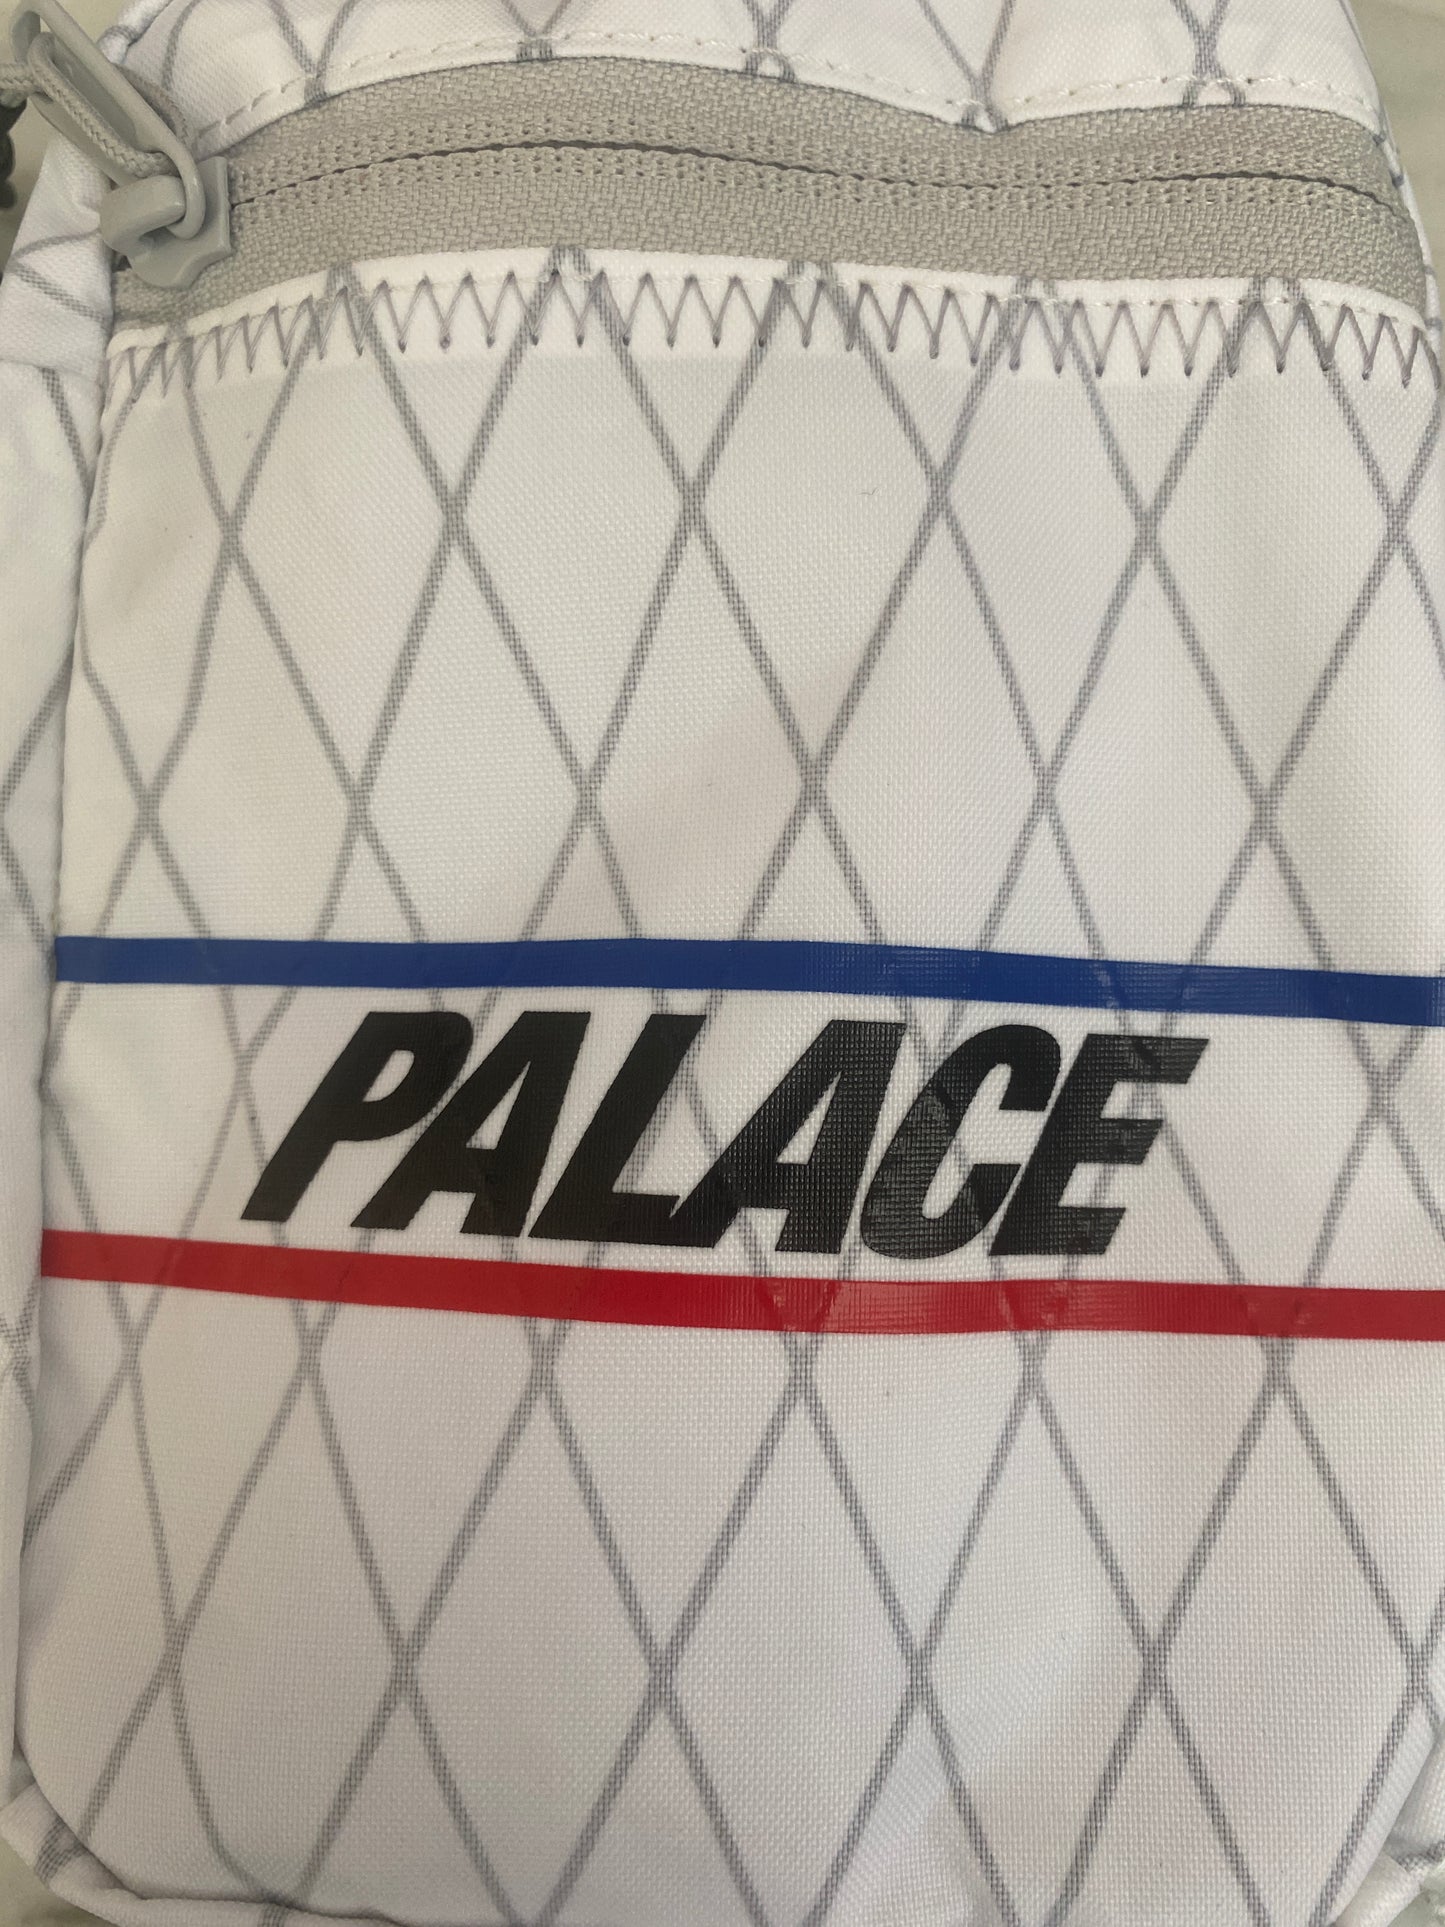 Palace - Dimension Shot Bag (White)